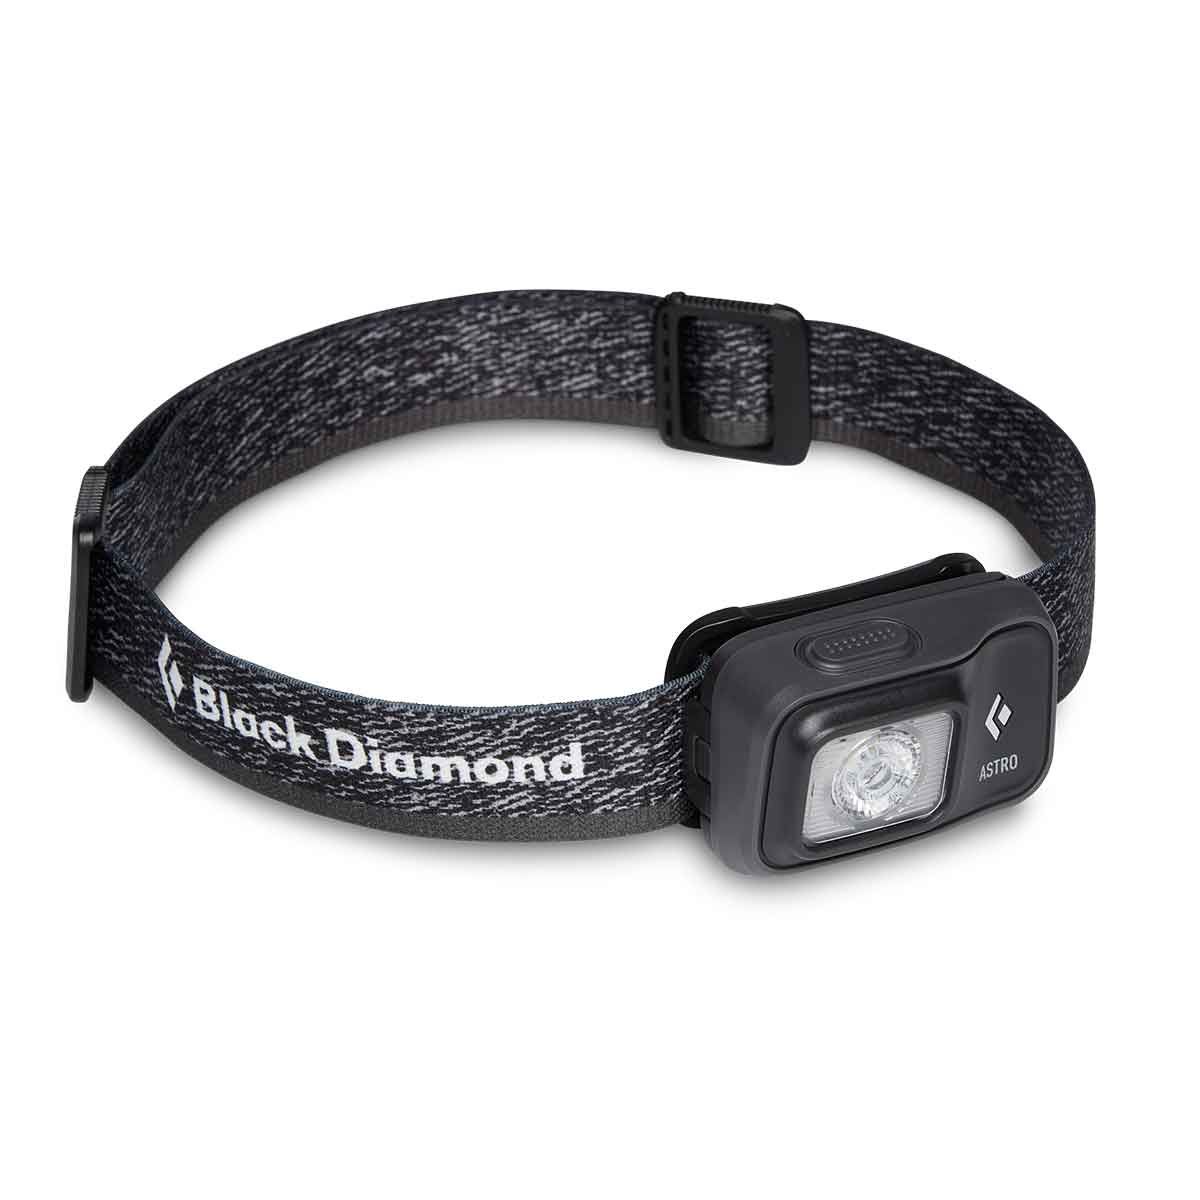 Black Diamond Astro 300 graphite